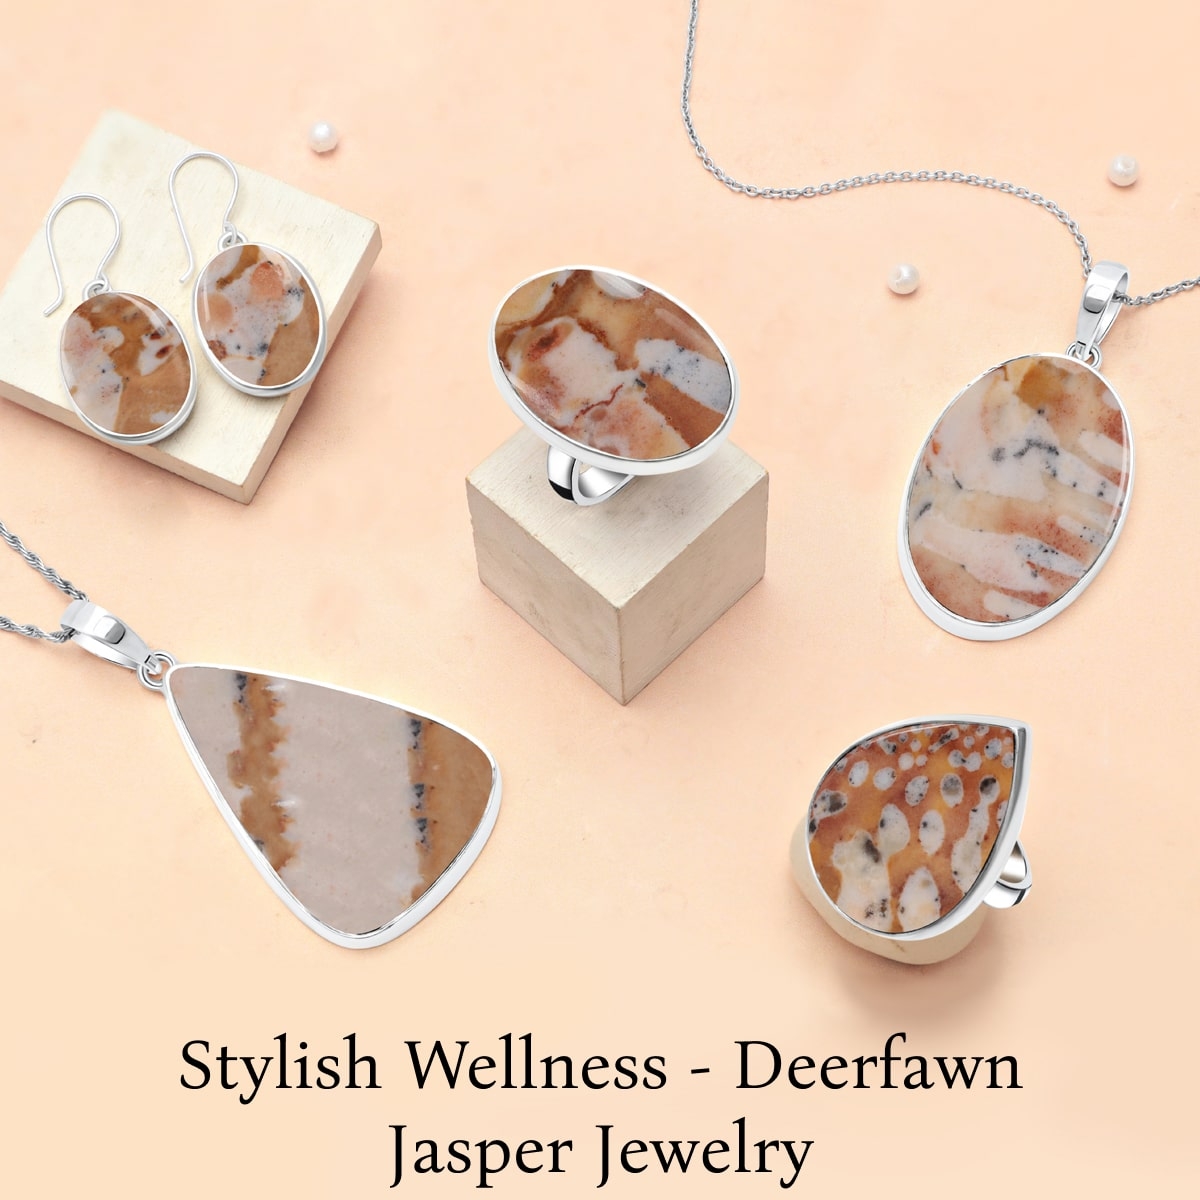 Deerfawn Jasper Jewelry - Fashion and Healing Accessory